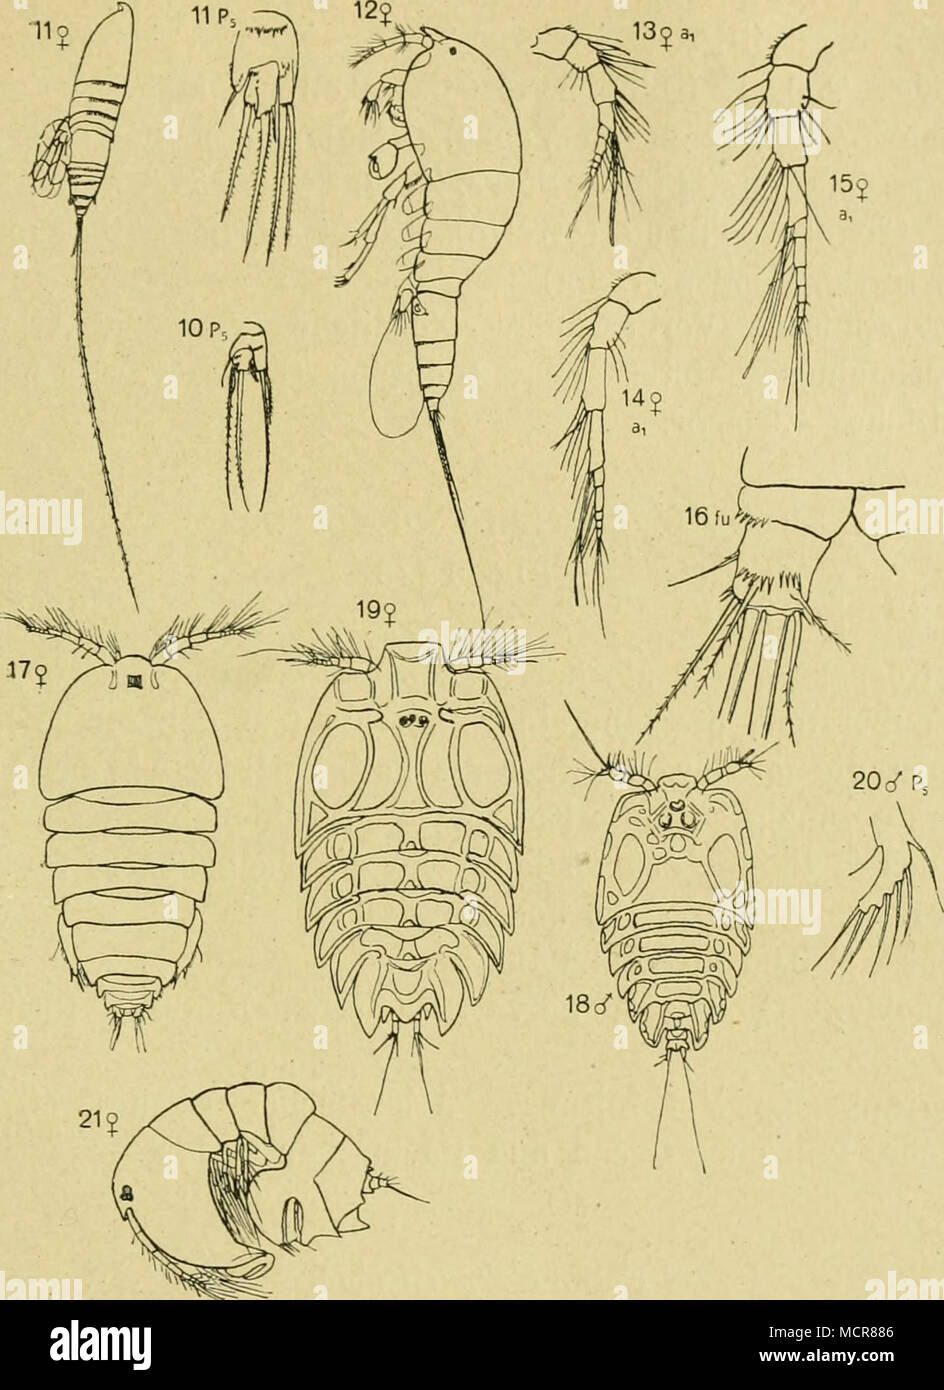 . Fig. J. 10 Microseiella nortcegica (Boeck). 11 M. rosea (Dana). 12 Harpadiciis chelifer (0. F. Müller). 13 H. flexus Brady et Robertson. 14 H. gracüis Claus. 15 R. uniremis Kröyer. 16 Tigriopus fulvus var. adriatica Doüwe. 17 Alteutha inter- rupta [Goodsir). 18 Ptltidium gracile [Claxjs). 19 P.pnrpureumFuiLivTi. 20 P. rohustum (Claus). 21 Parategastes sphaericus (Claus). [10 m. 11 nach van Breemen. Ki nach van Douwe, 12—15, 17, 19, 21 uach ü. 0. Sars, 18 u. 20 nach Claus.] 1. Antenne 6gliedrig-, die proximalen Glieder zusammen so lang wie die 3 distalen (zusammen). Innere Endborste am Innenl Stock Photo